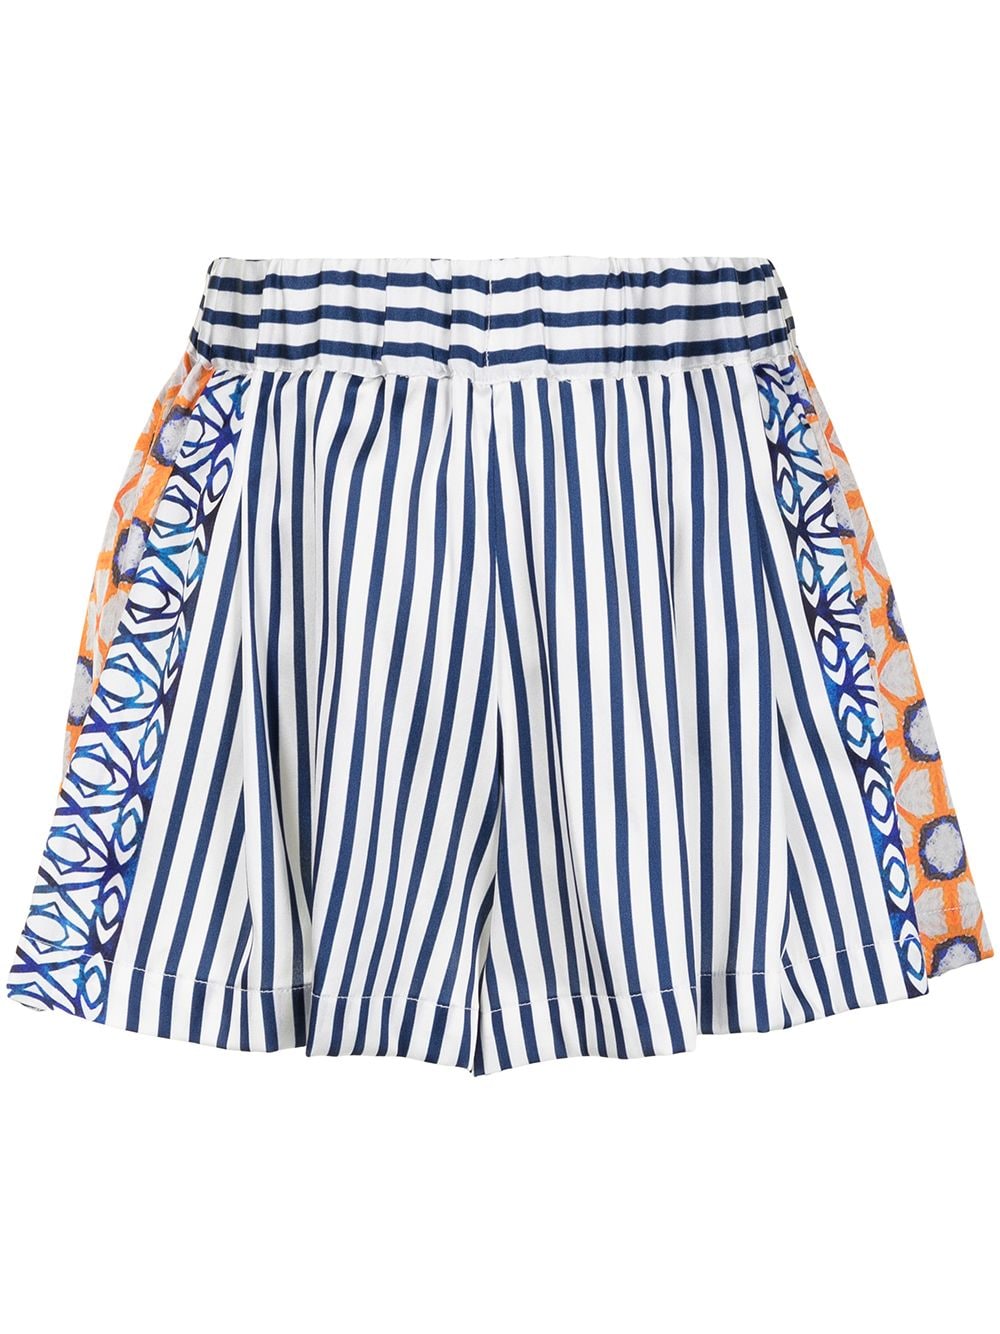 Eden stripe panelled shorts